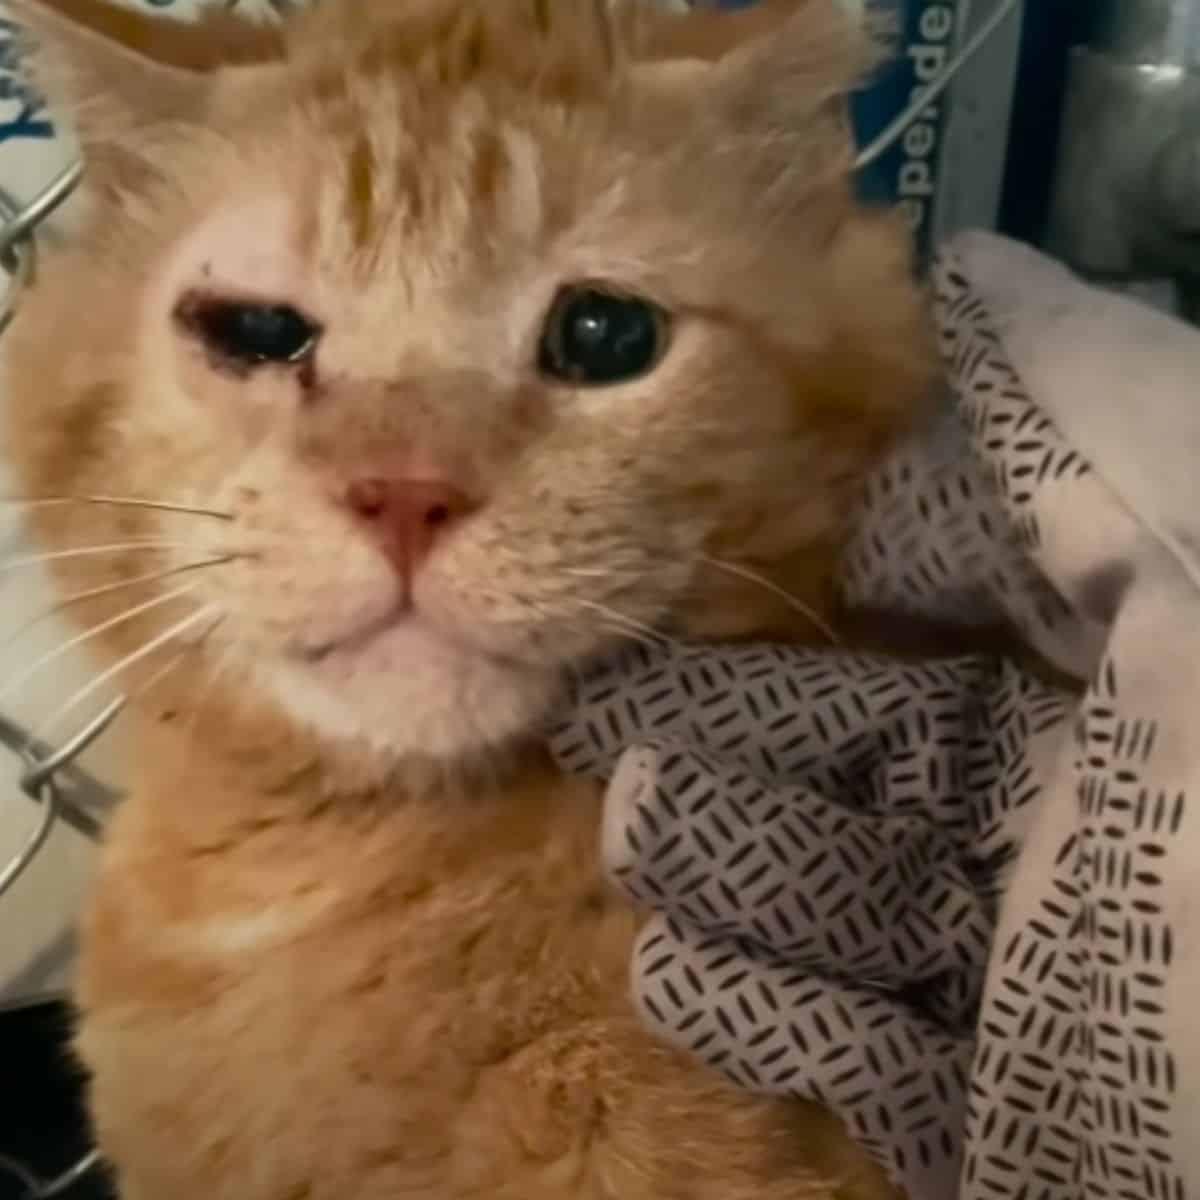 a yellow kitten with an injured eye